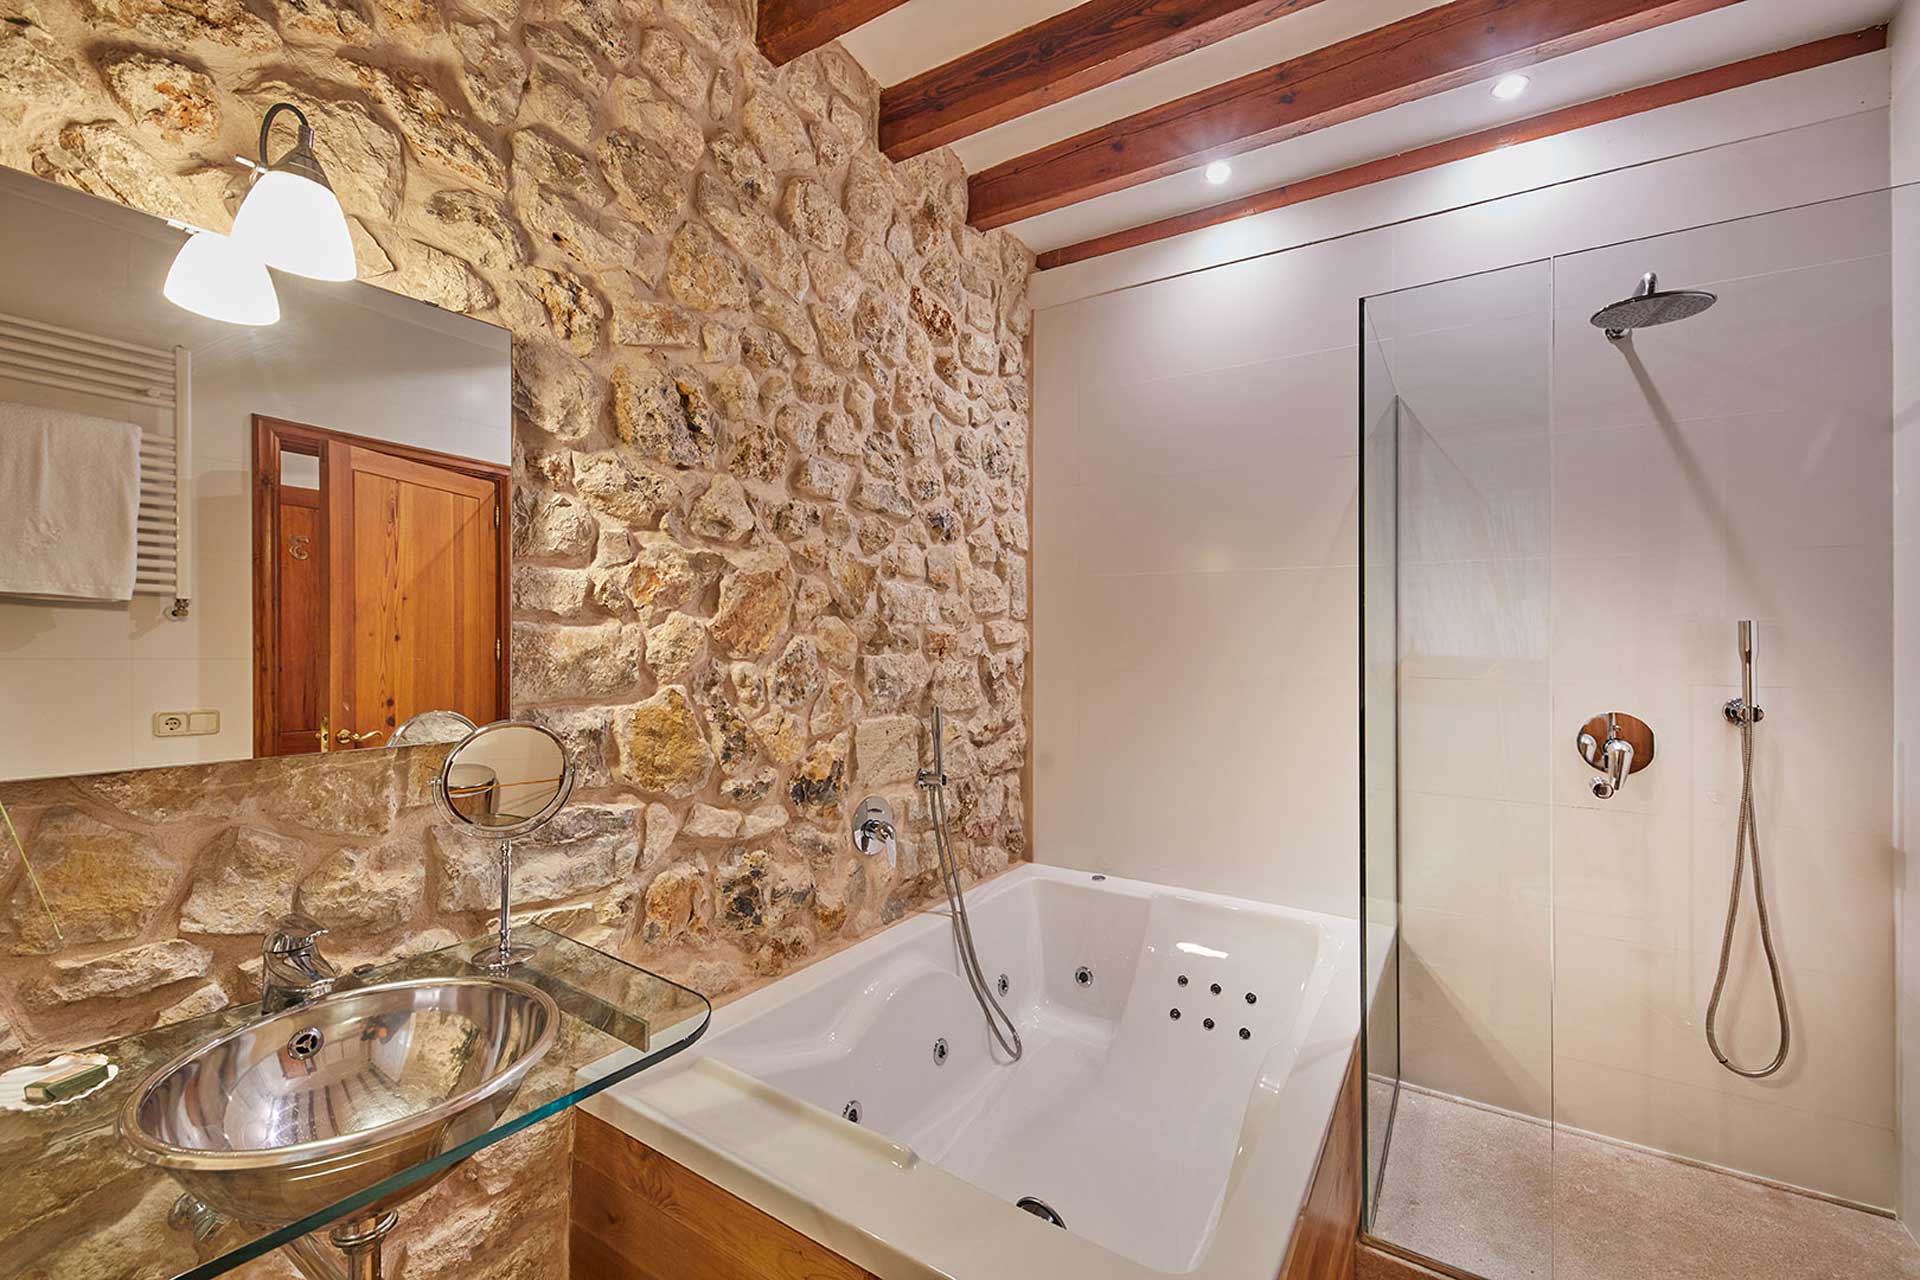 Finca-Hotel Cas Comte - En Suite bathroom with whirlpool